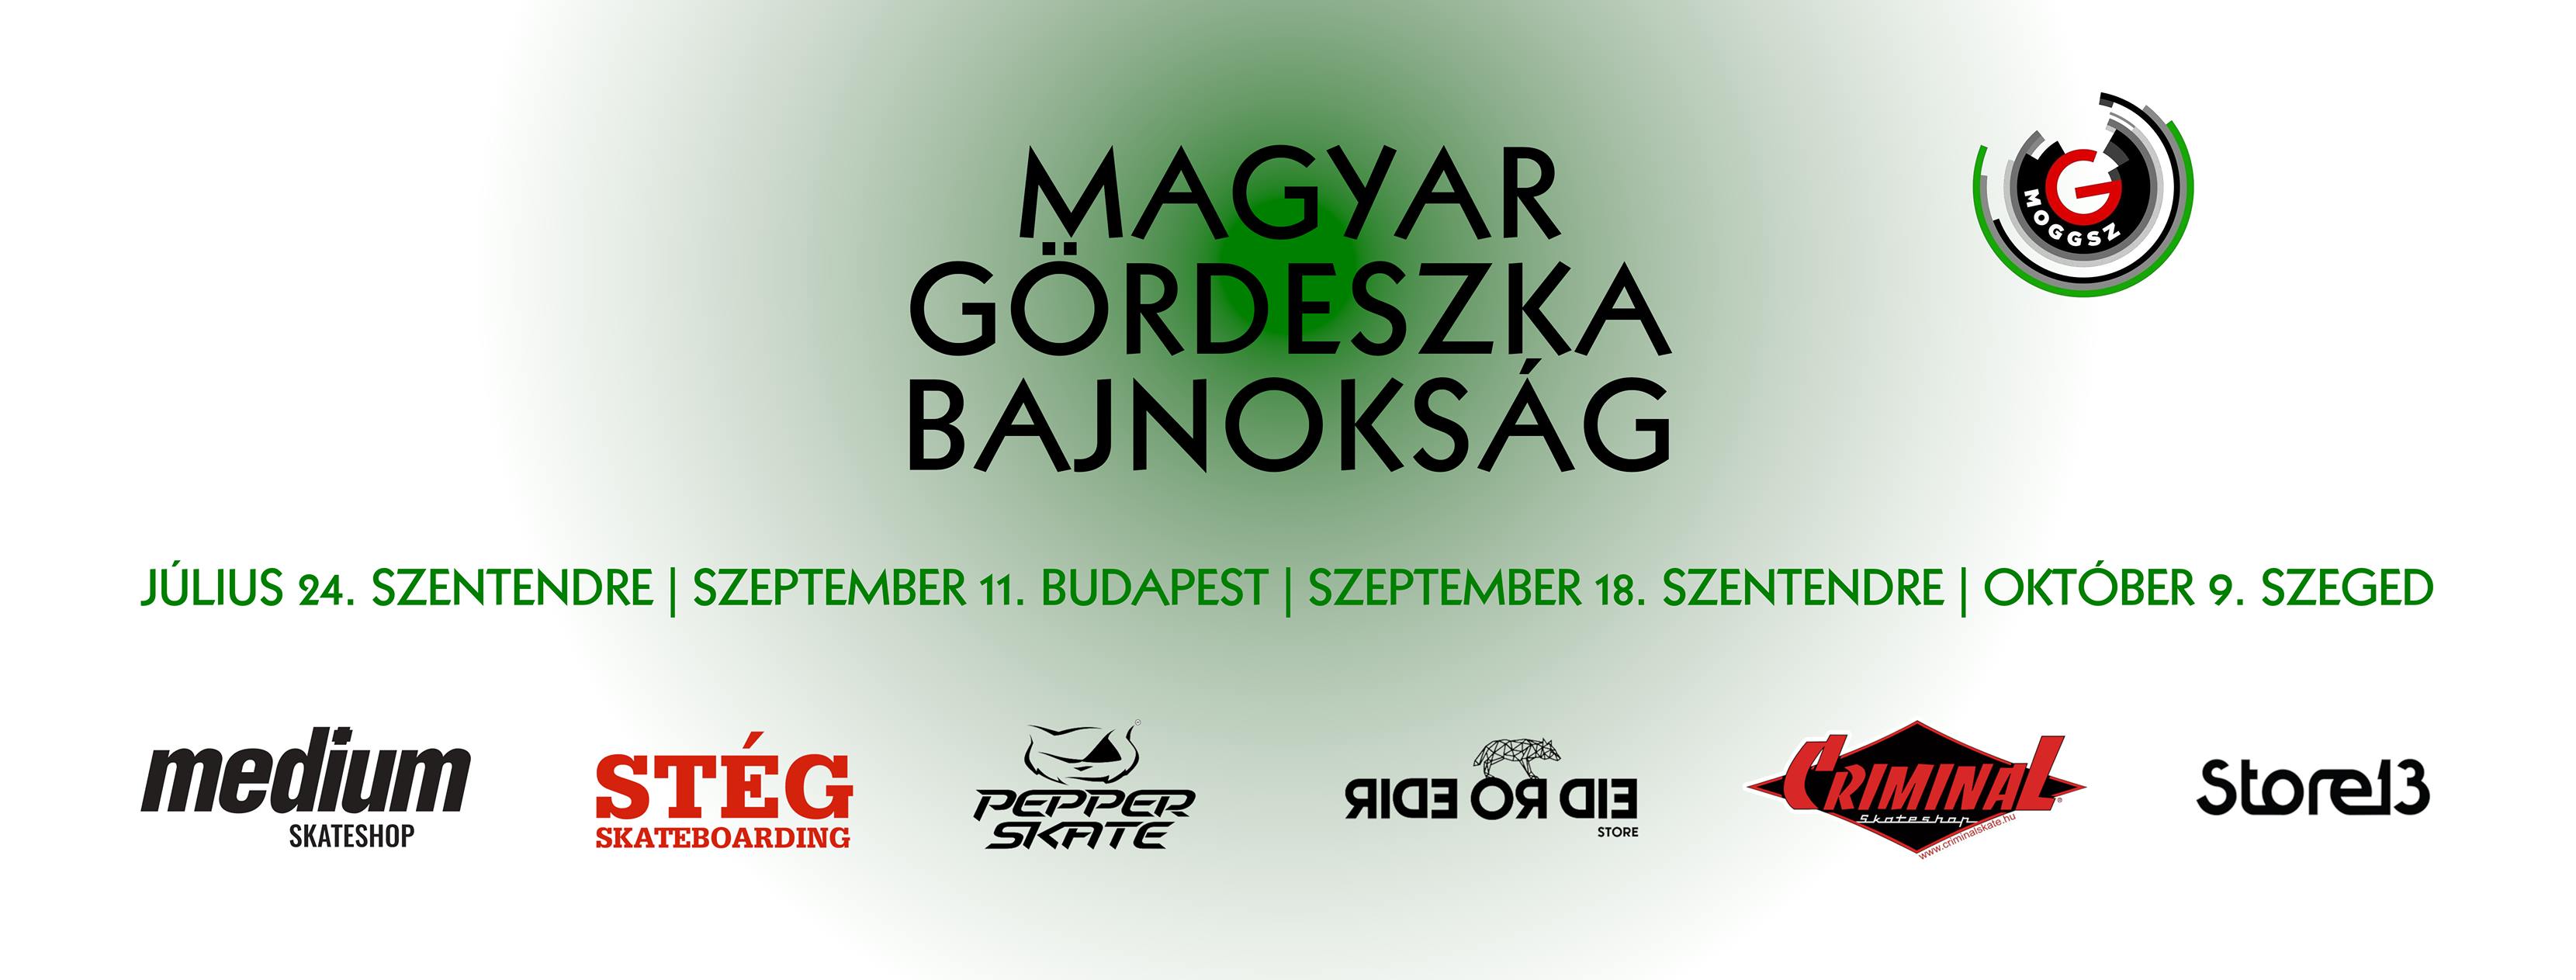 magyar_gordeszka_bajnoksag_2021_flyer.jpg